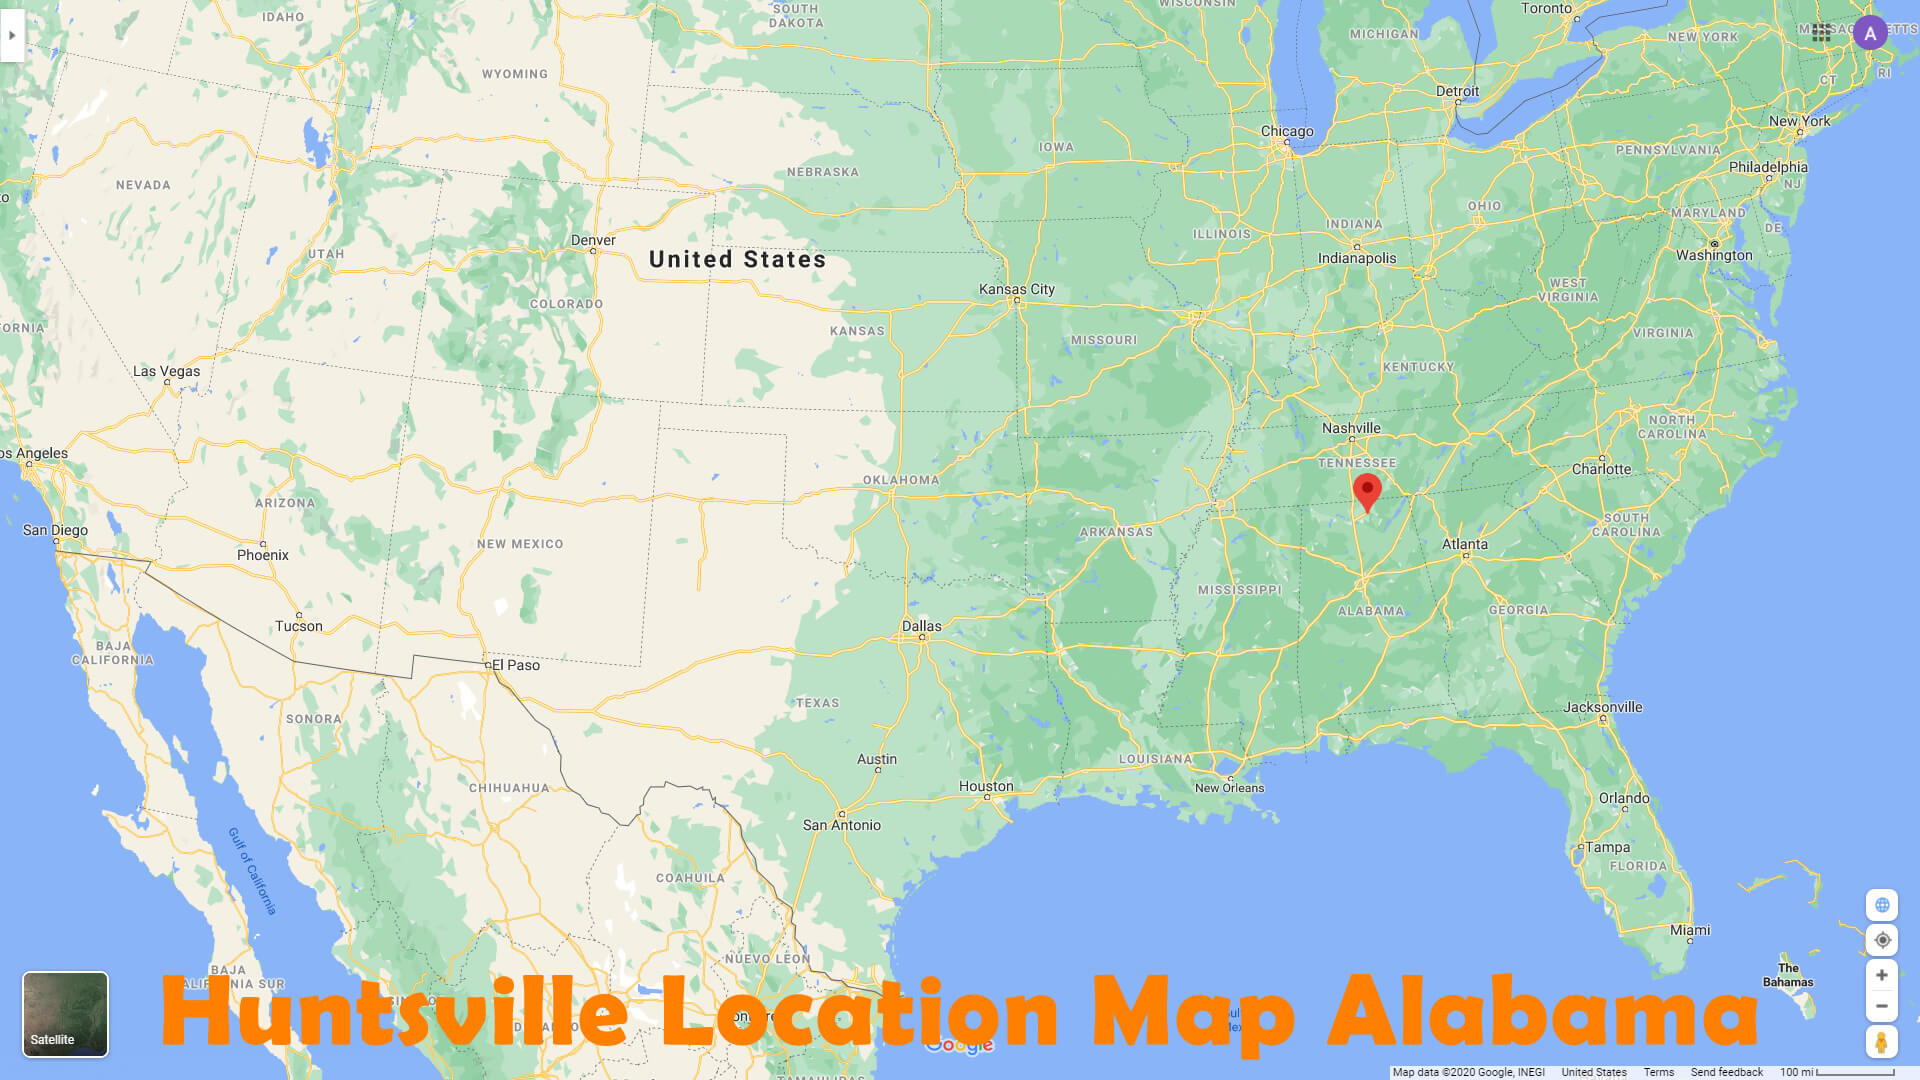 Huntsville Location Map Alabama